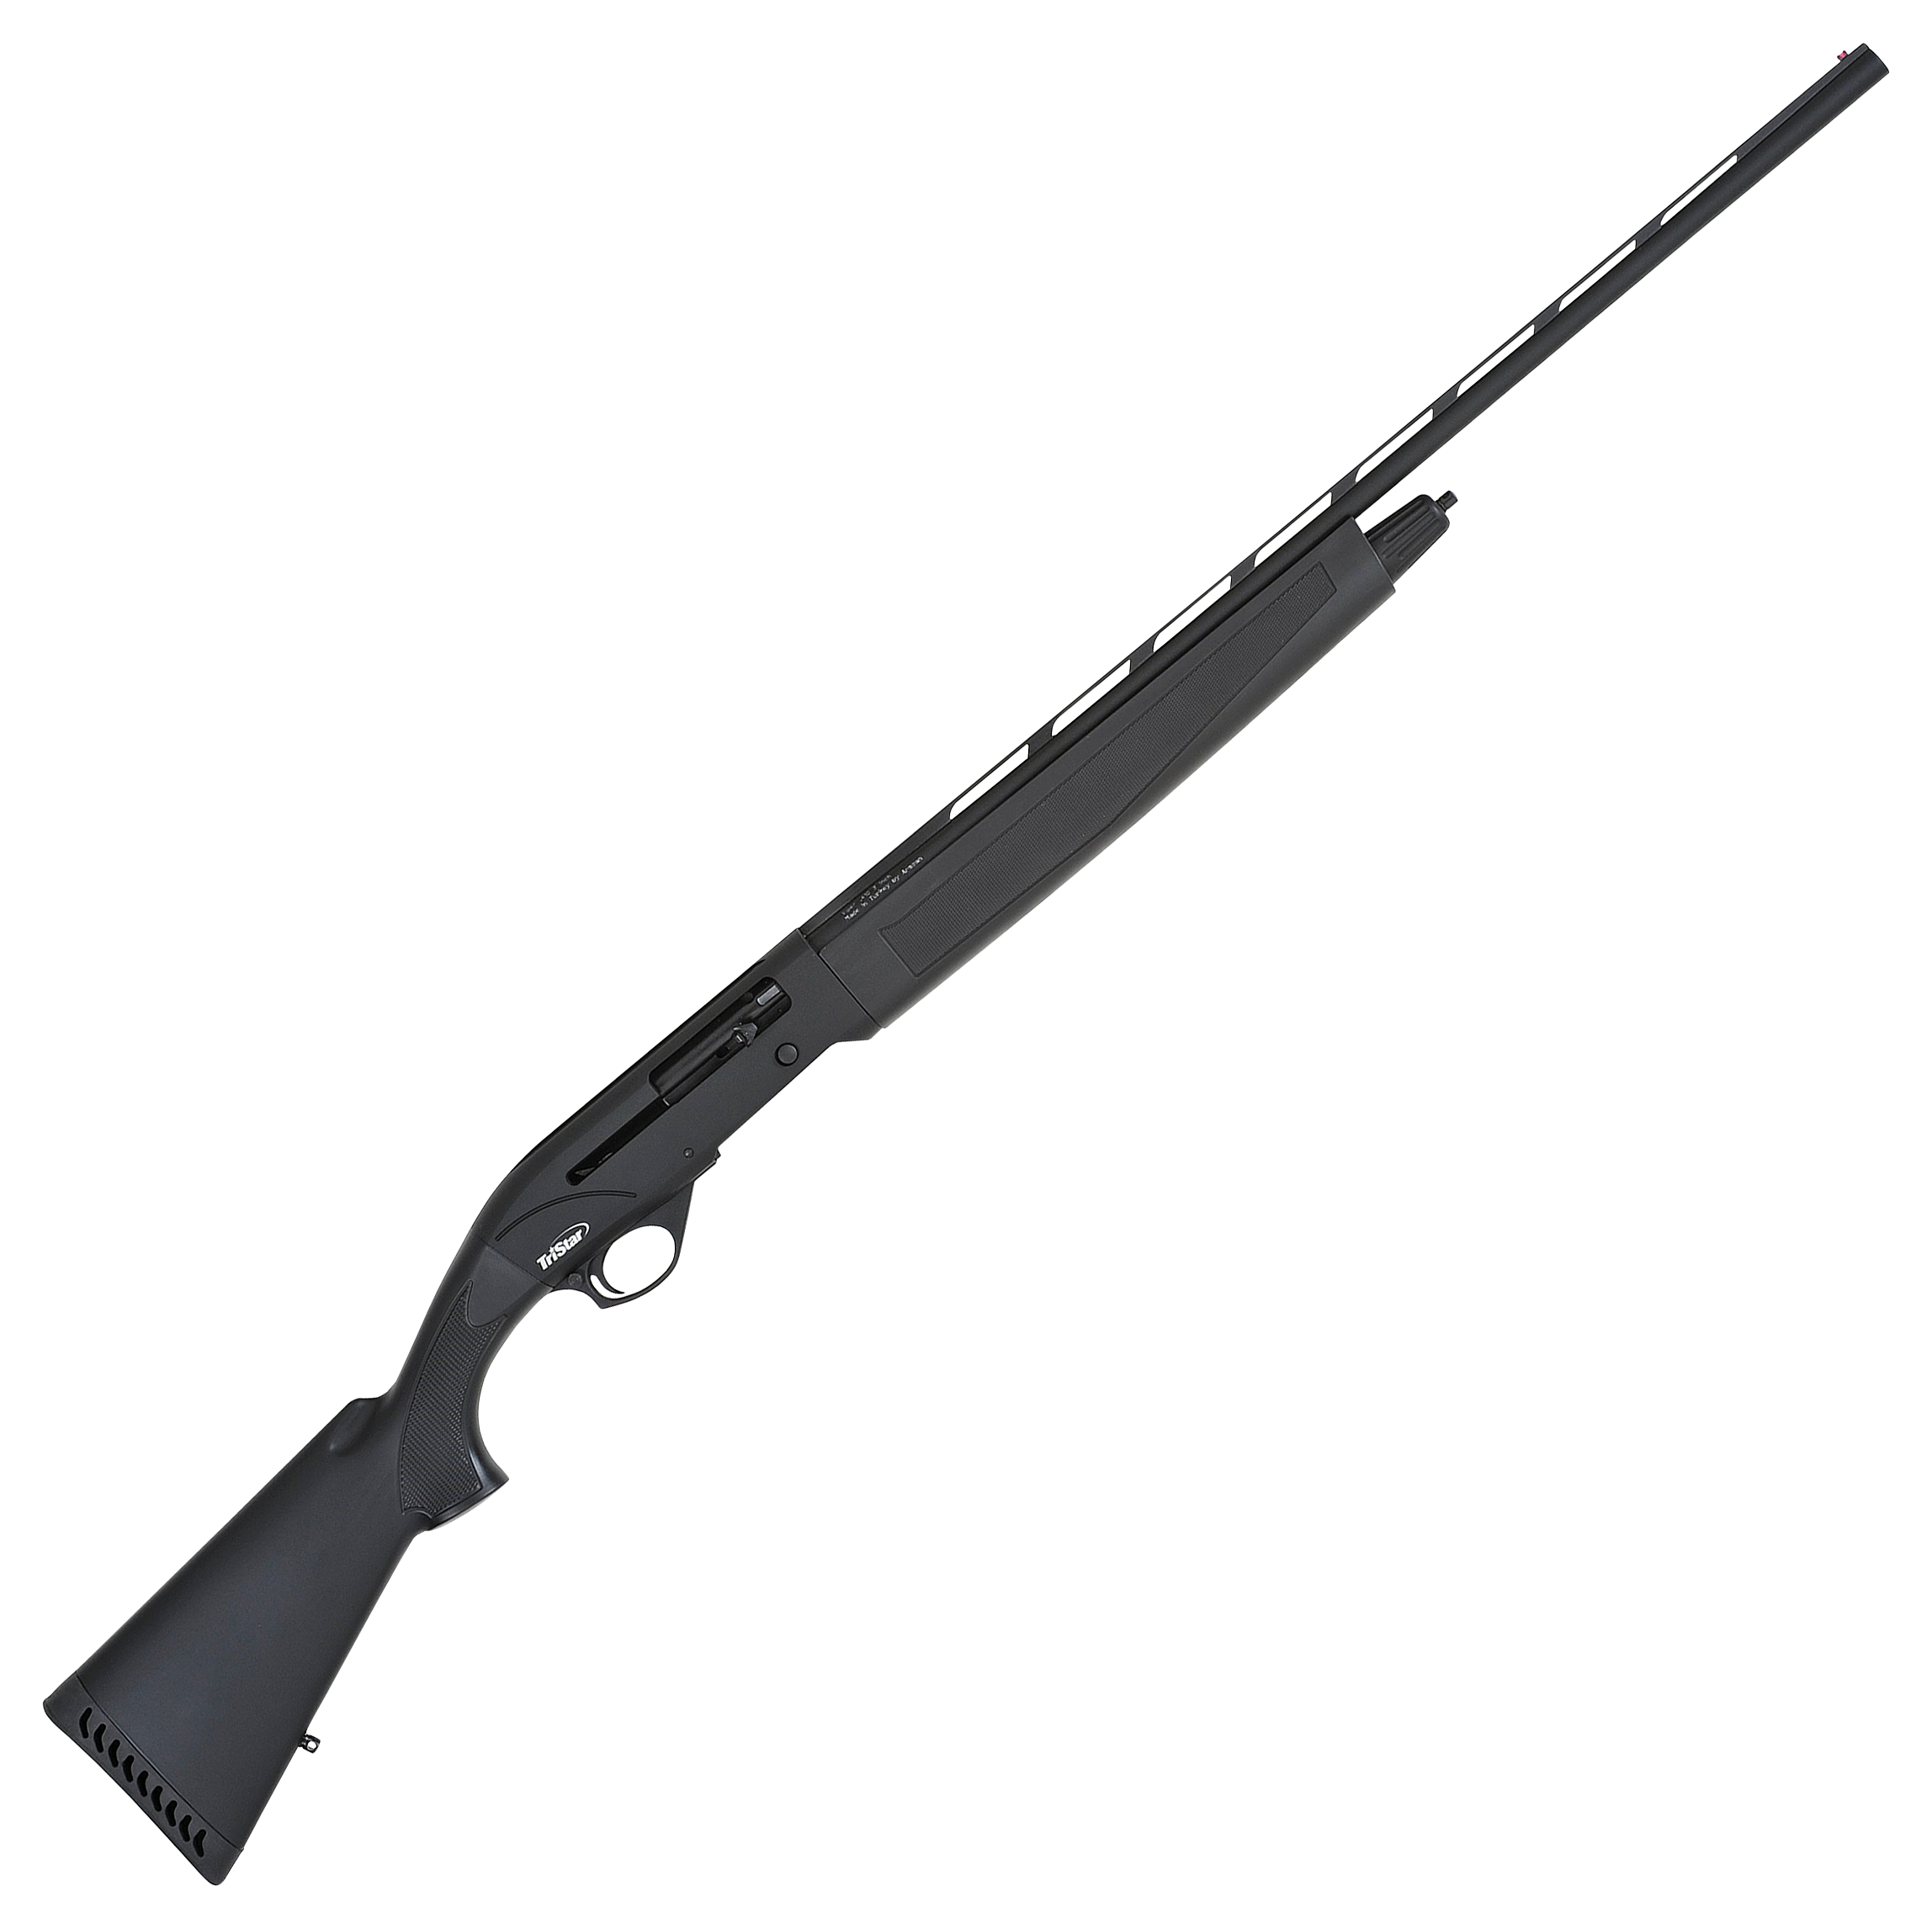 TriStar 24113 Viper G2 Compact Semi Ato Shotgun 410 Ga, 26" Bbl, Synthetic Stock, 6031-0229